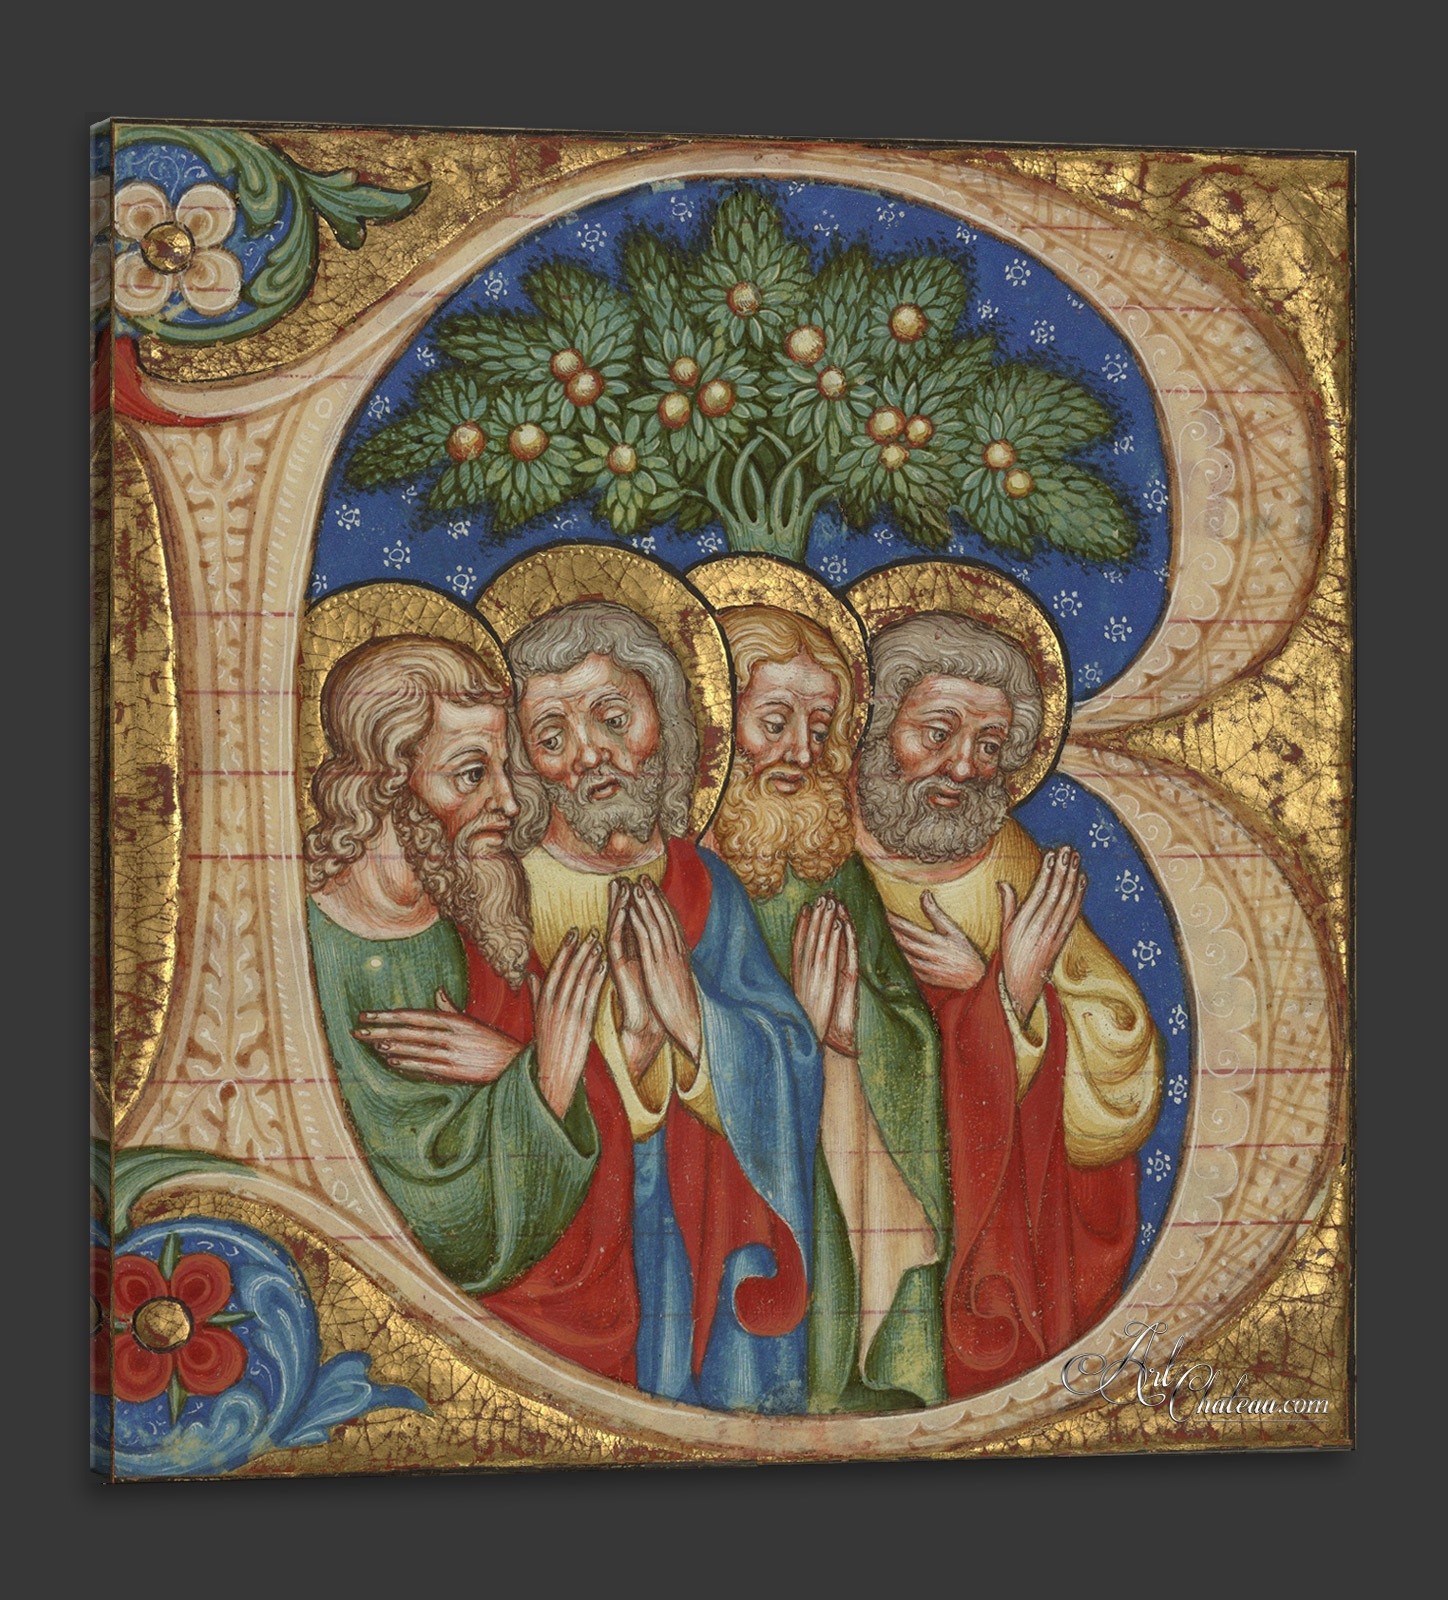 15th Century Illumination, after the Olivetan Master